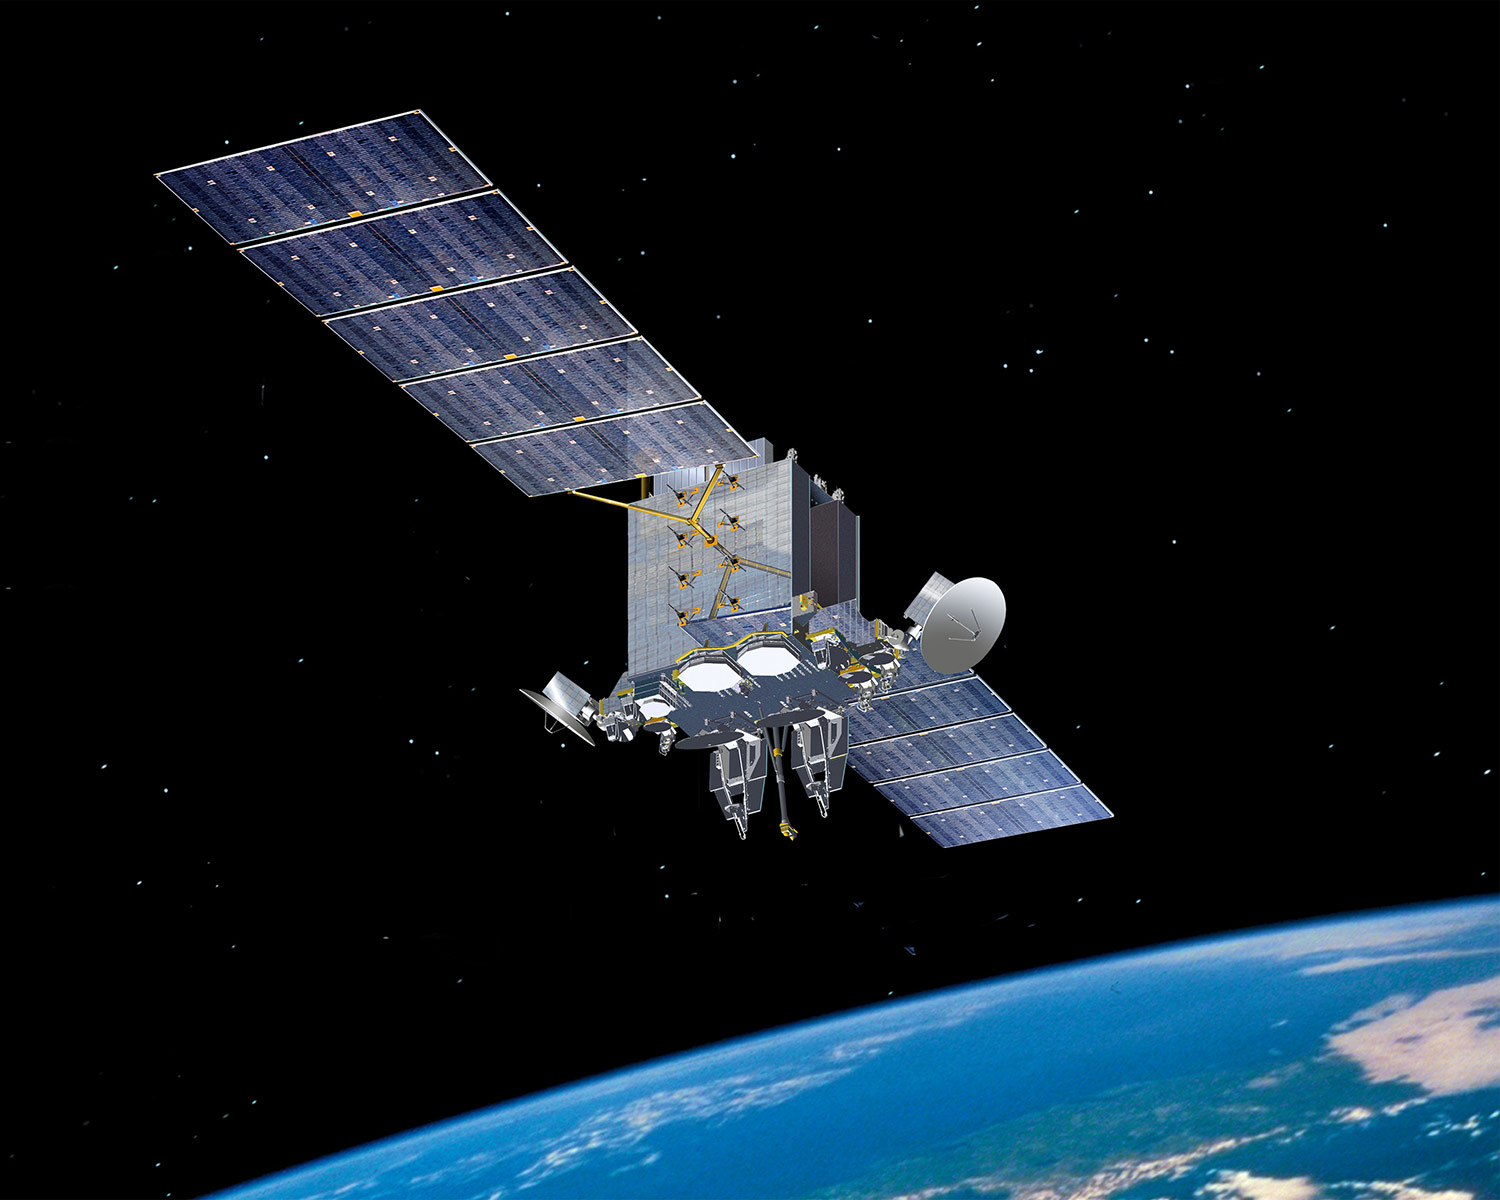 AEHF communications satellites in orbit above earth